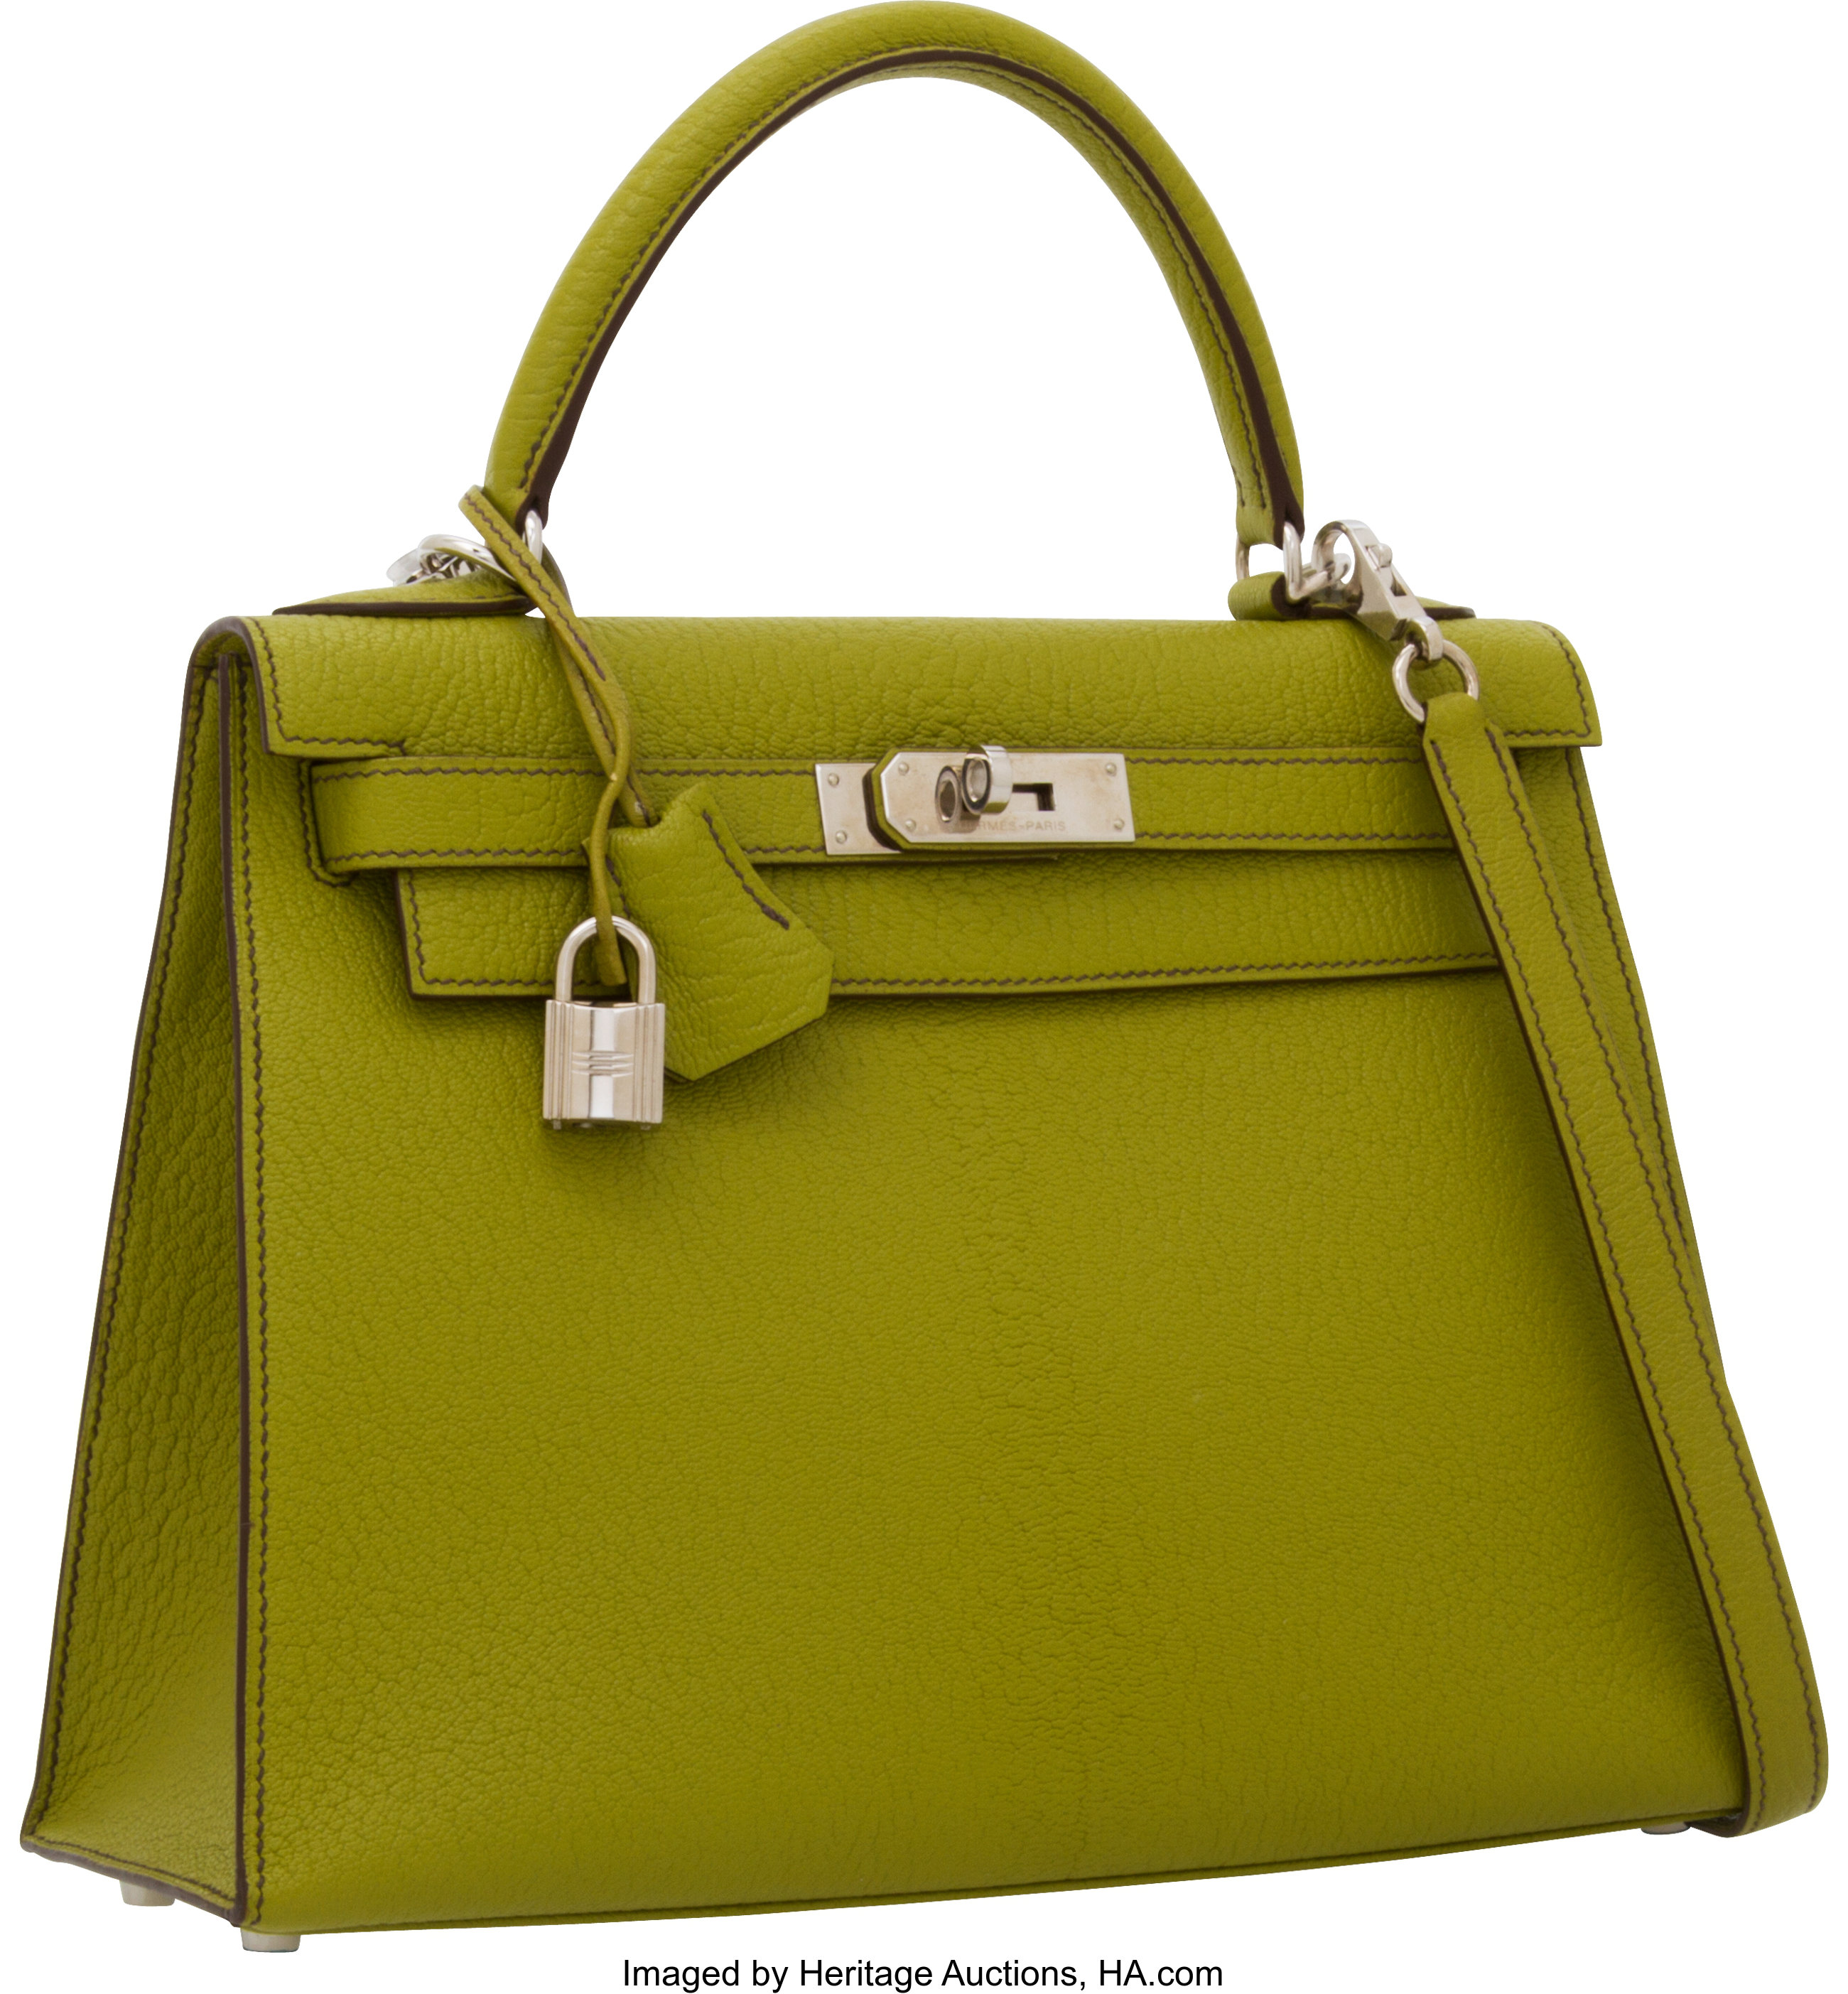 Hermes 28cm Vert Anis Chevre Leather Sellier Kelly Bag with